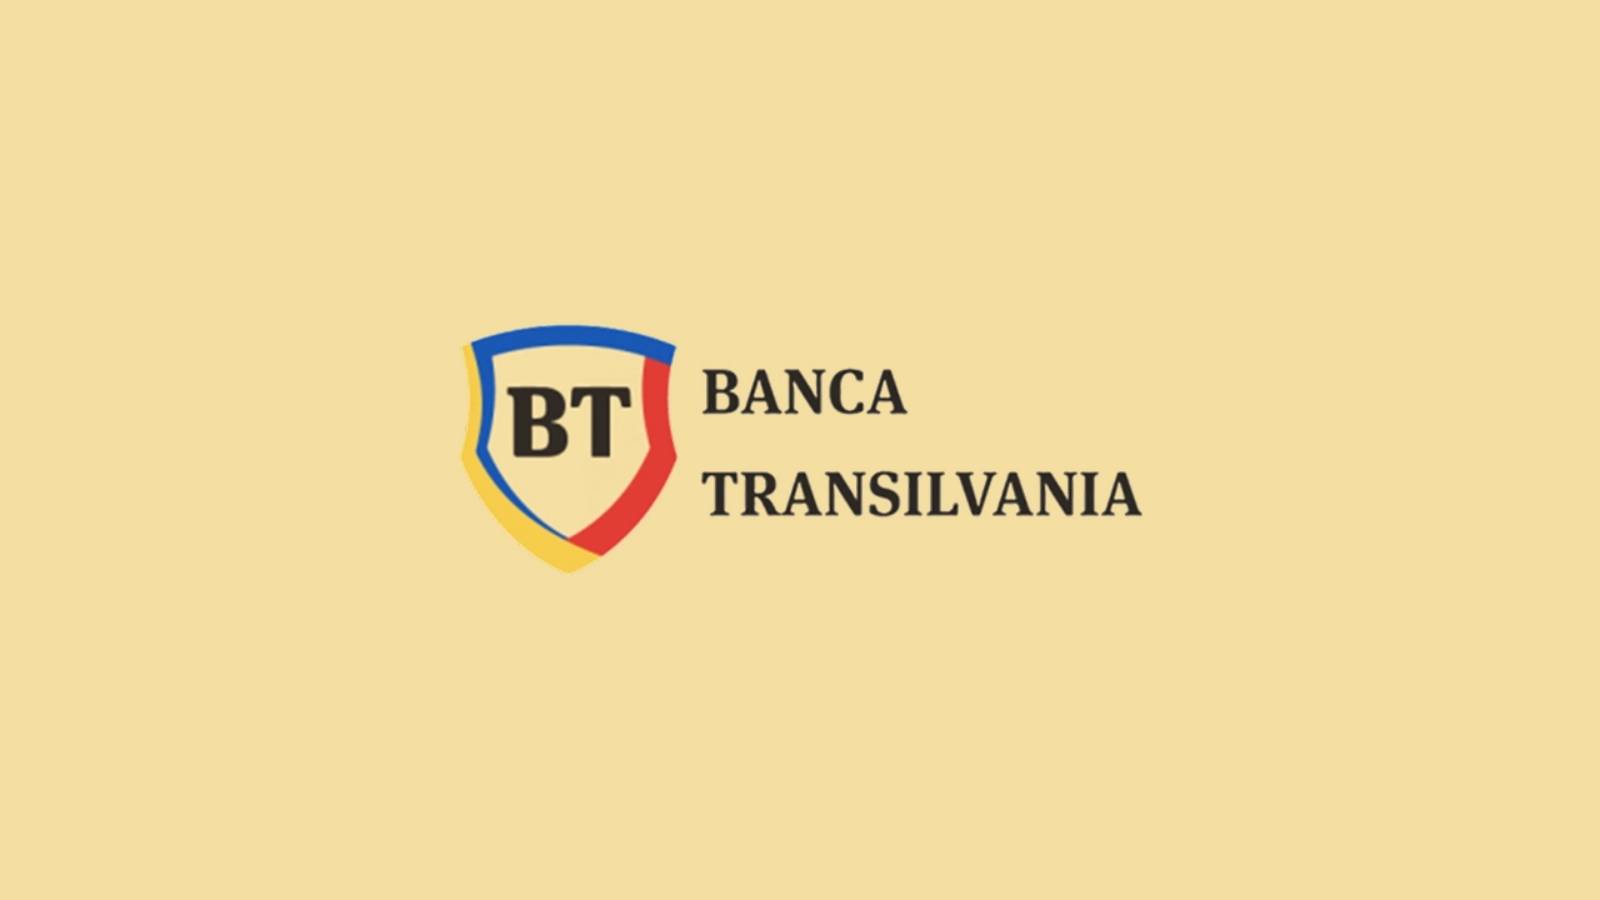 BANCA Transilvania Cerere Oficiala ULTIM MOMENT ATENTIONATI Clientii Romania